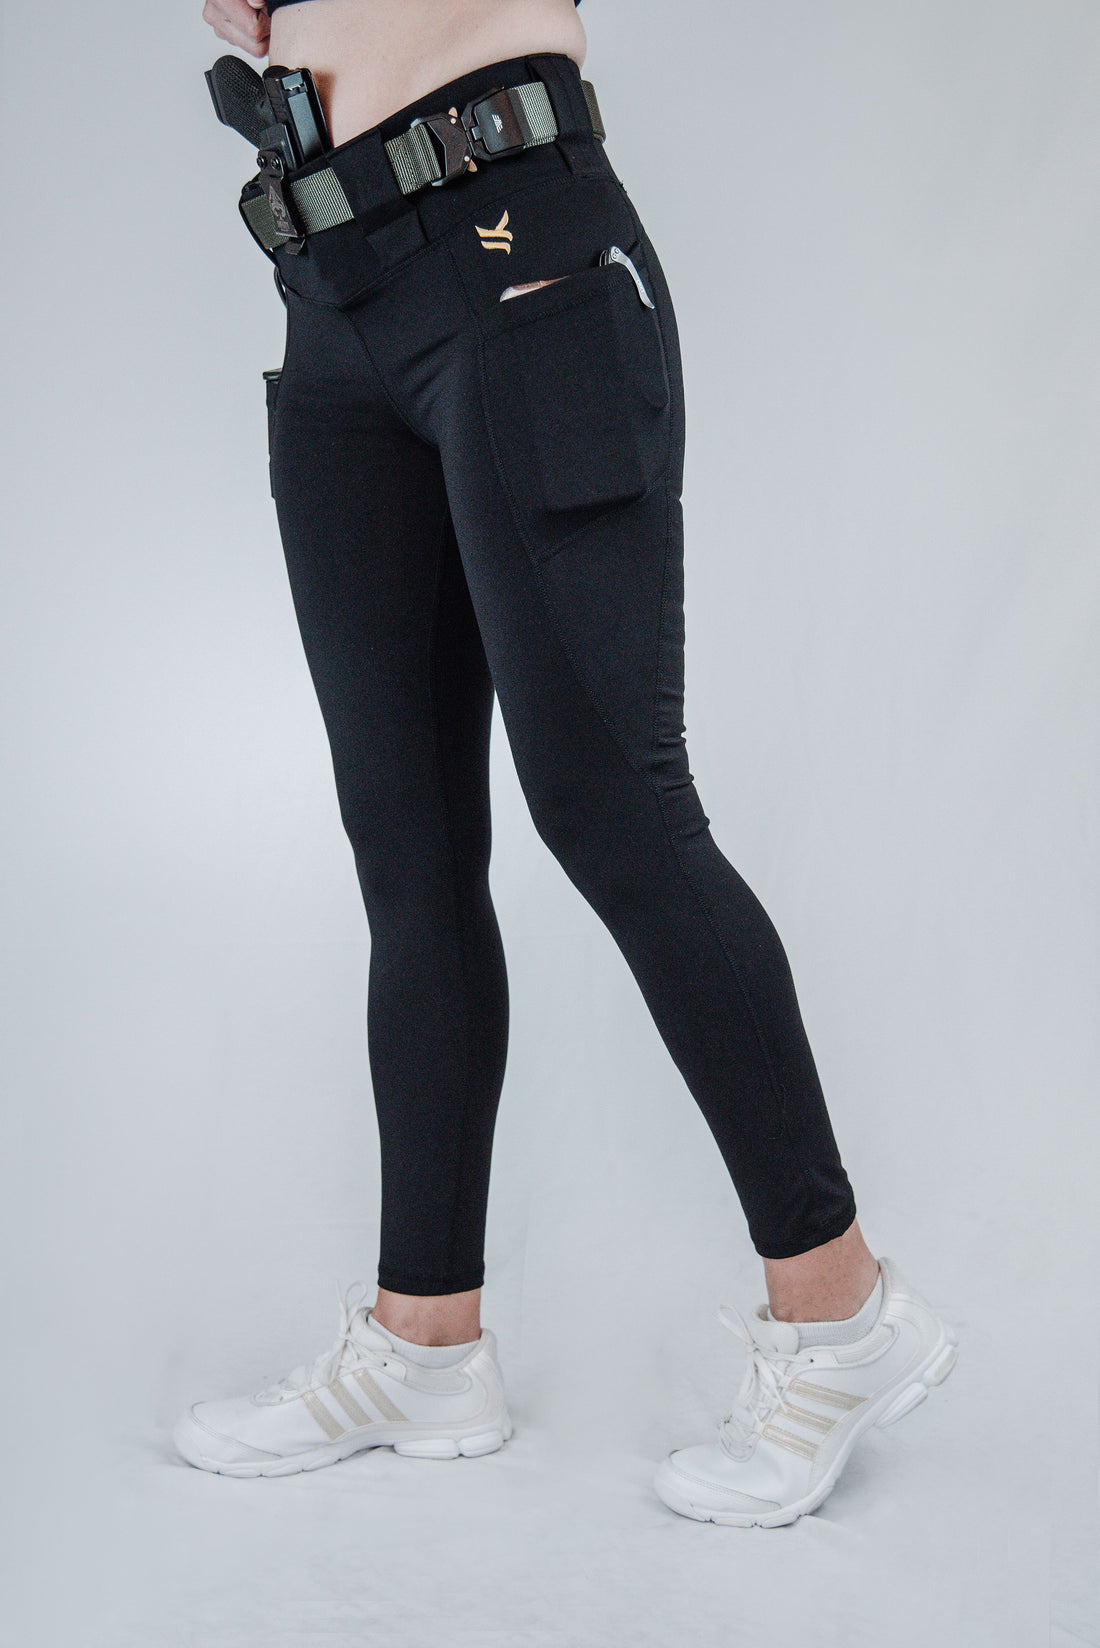 Large) Danskin Gray Camo leggings Womens – Revived Clothing Exchange